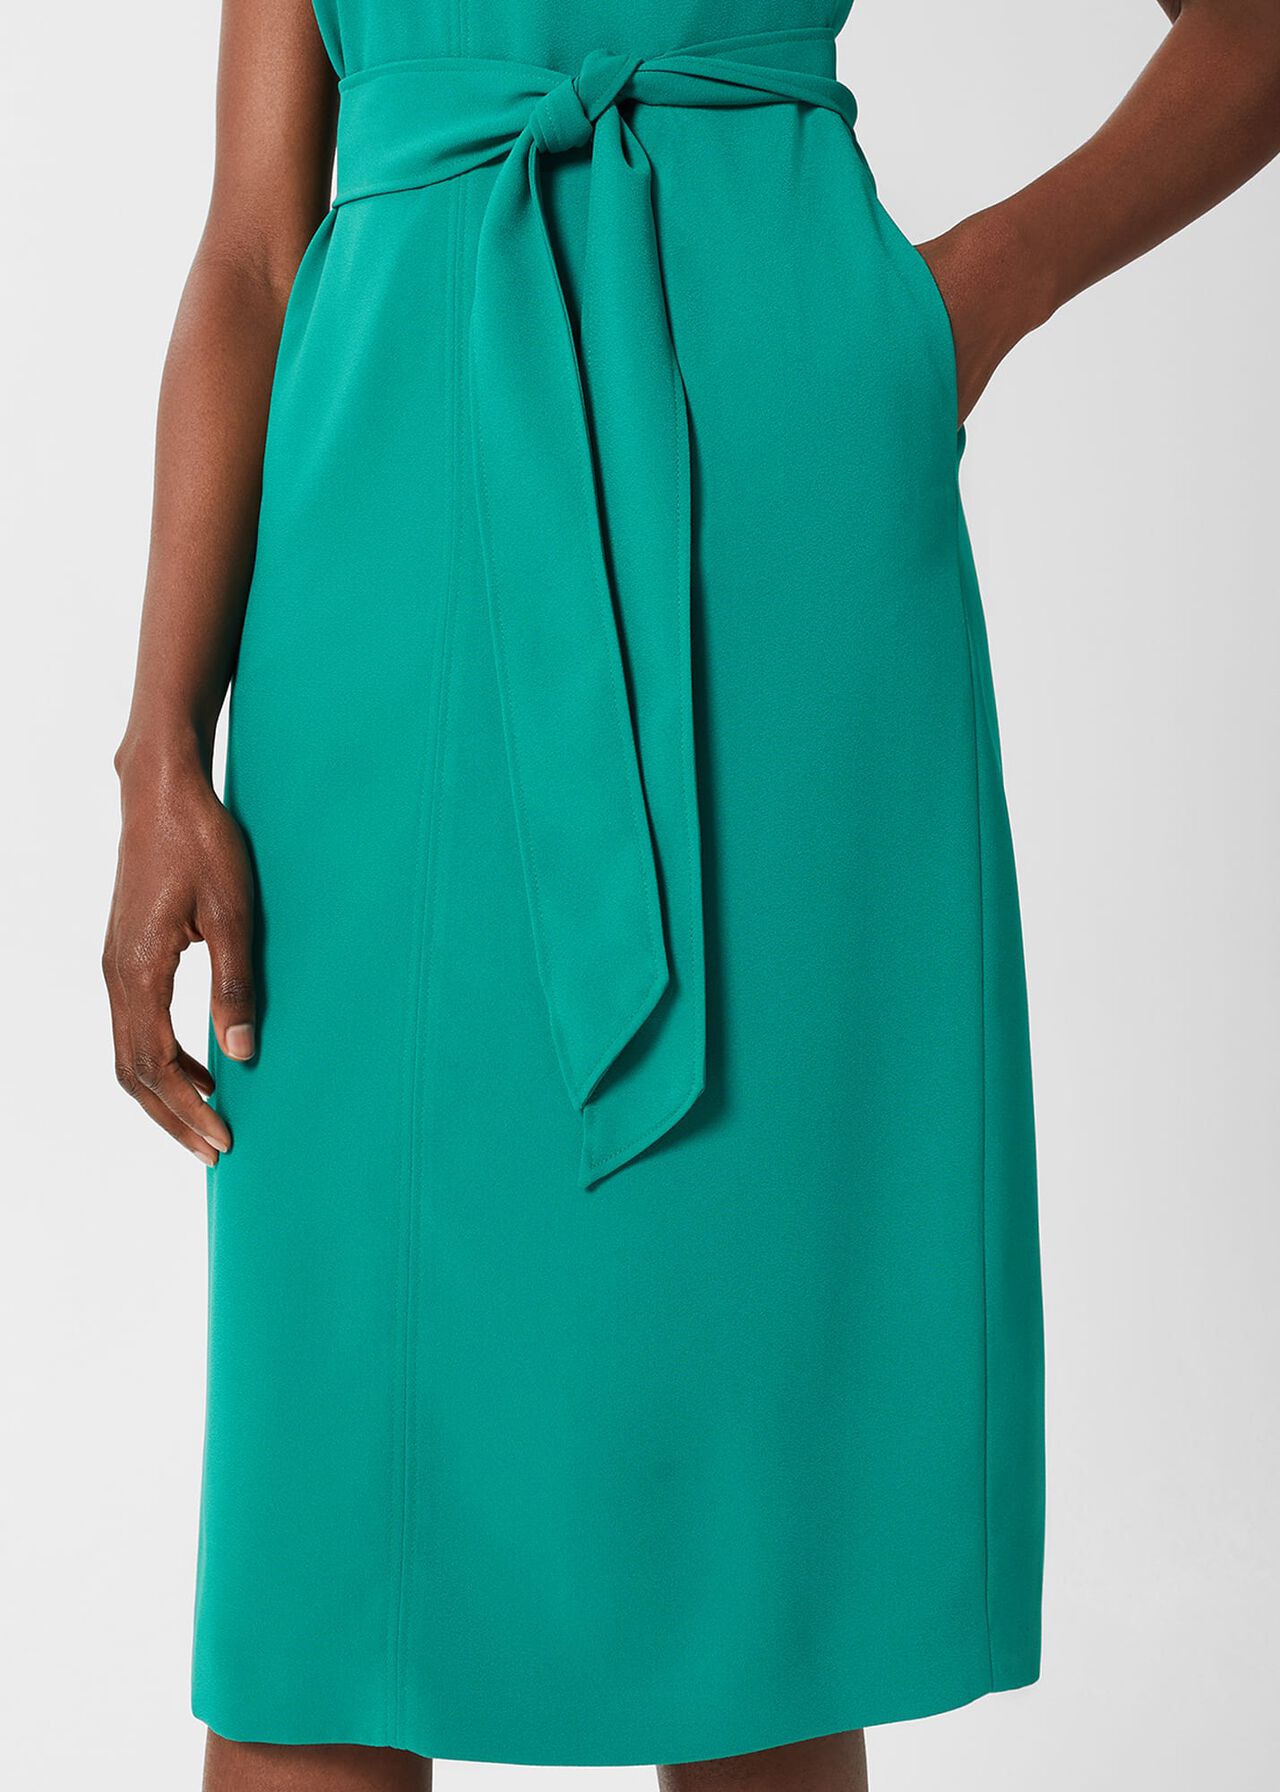 Reese Belted Dress, Ocean Green, hi-res